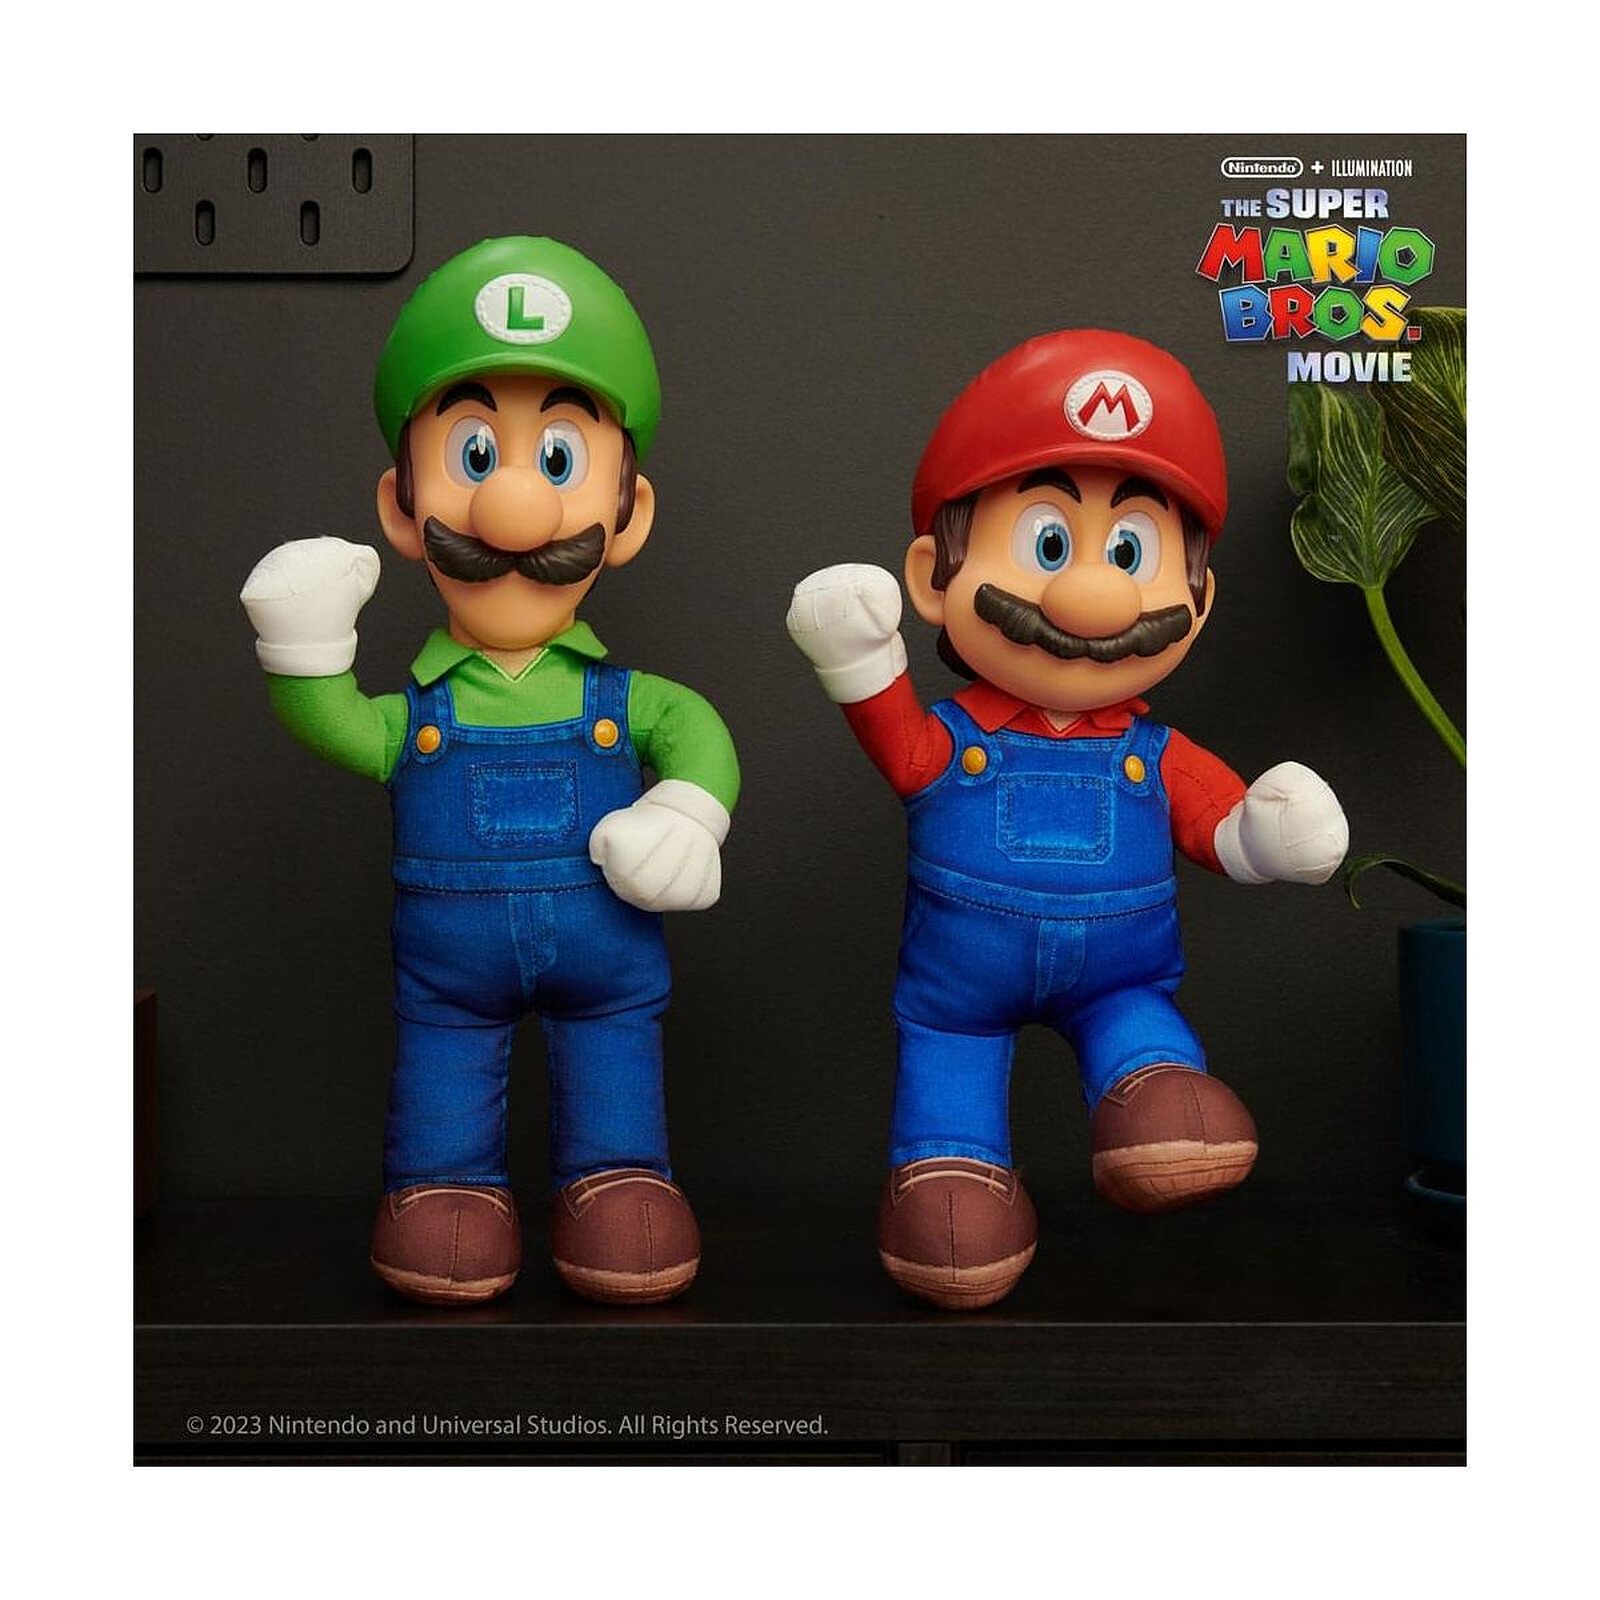 Peluche Luigi Super Mario Bros 50cm : : Jeux et Jouets